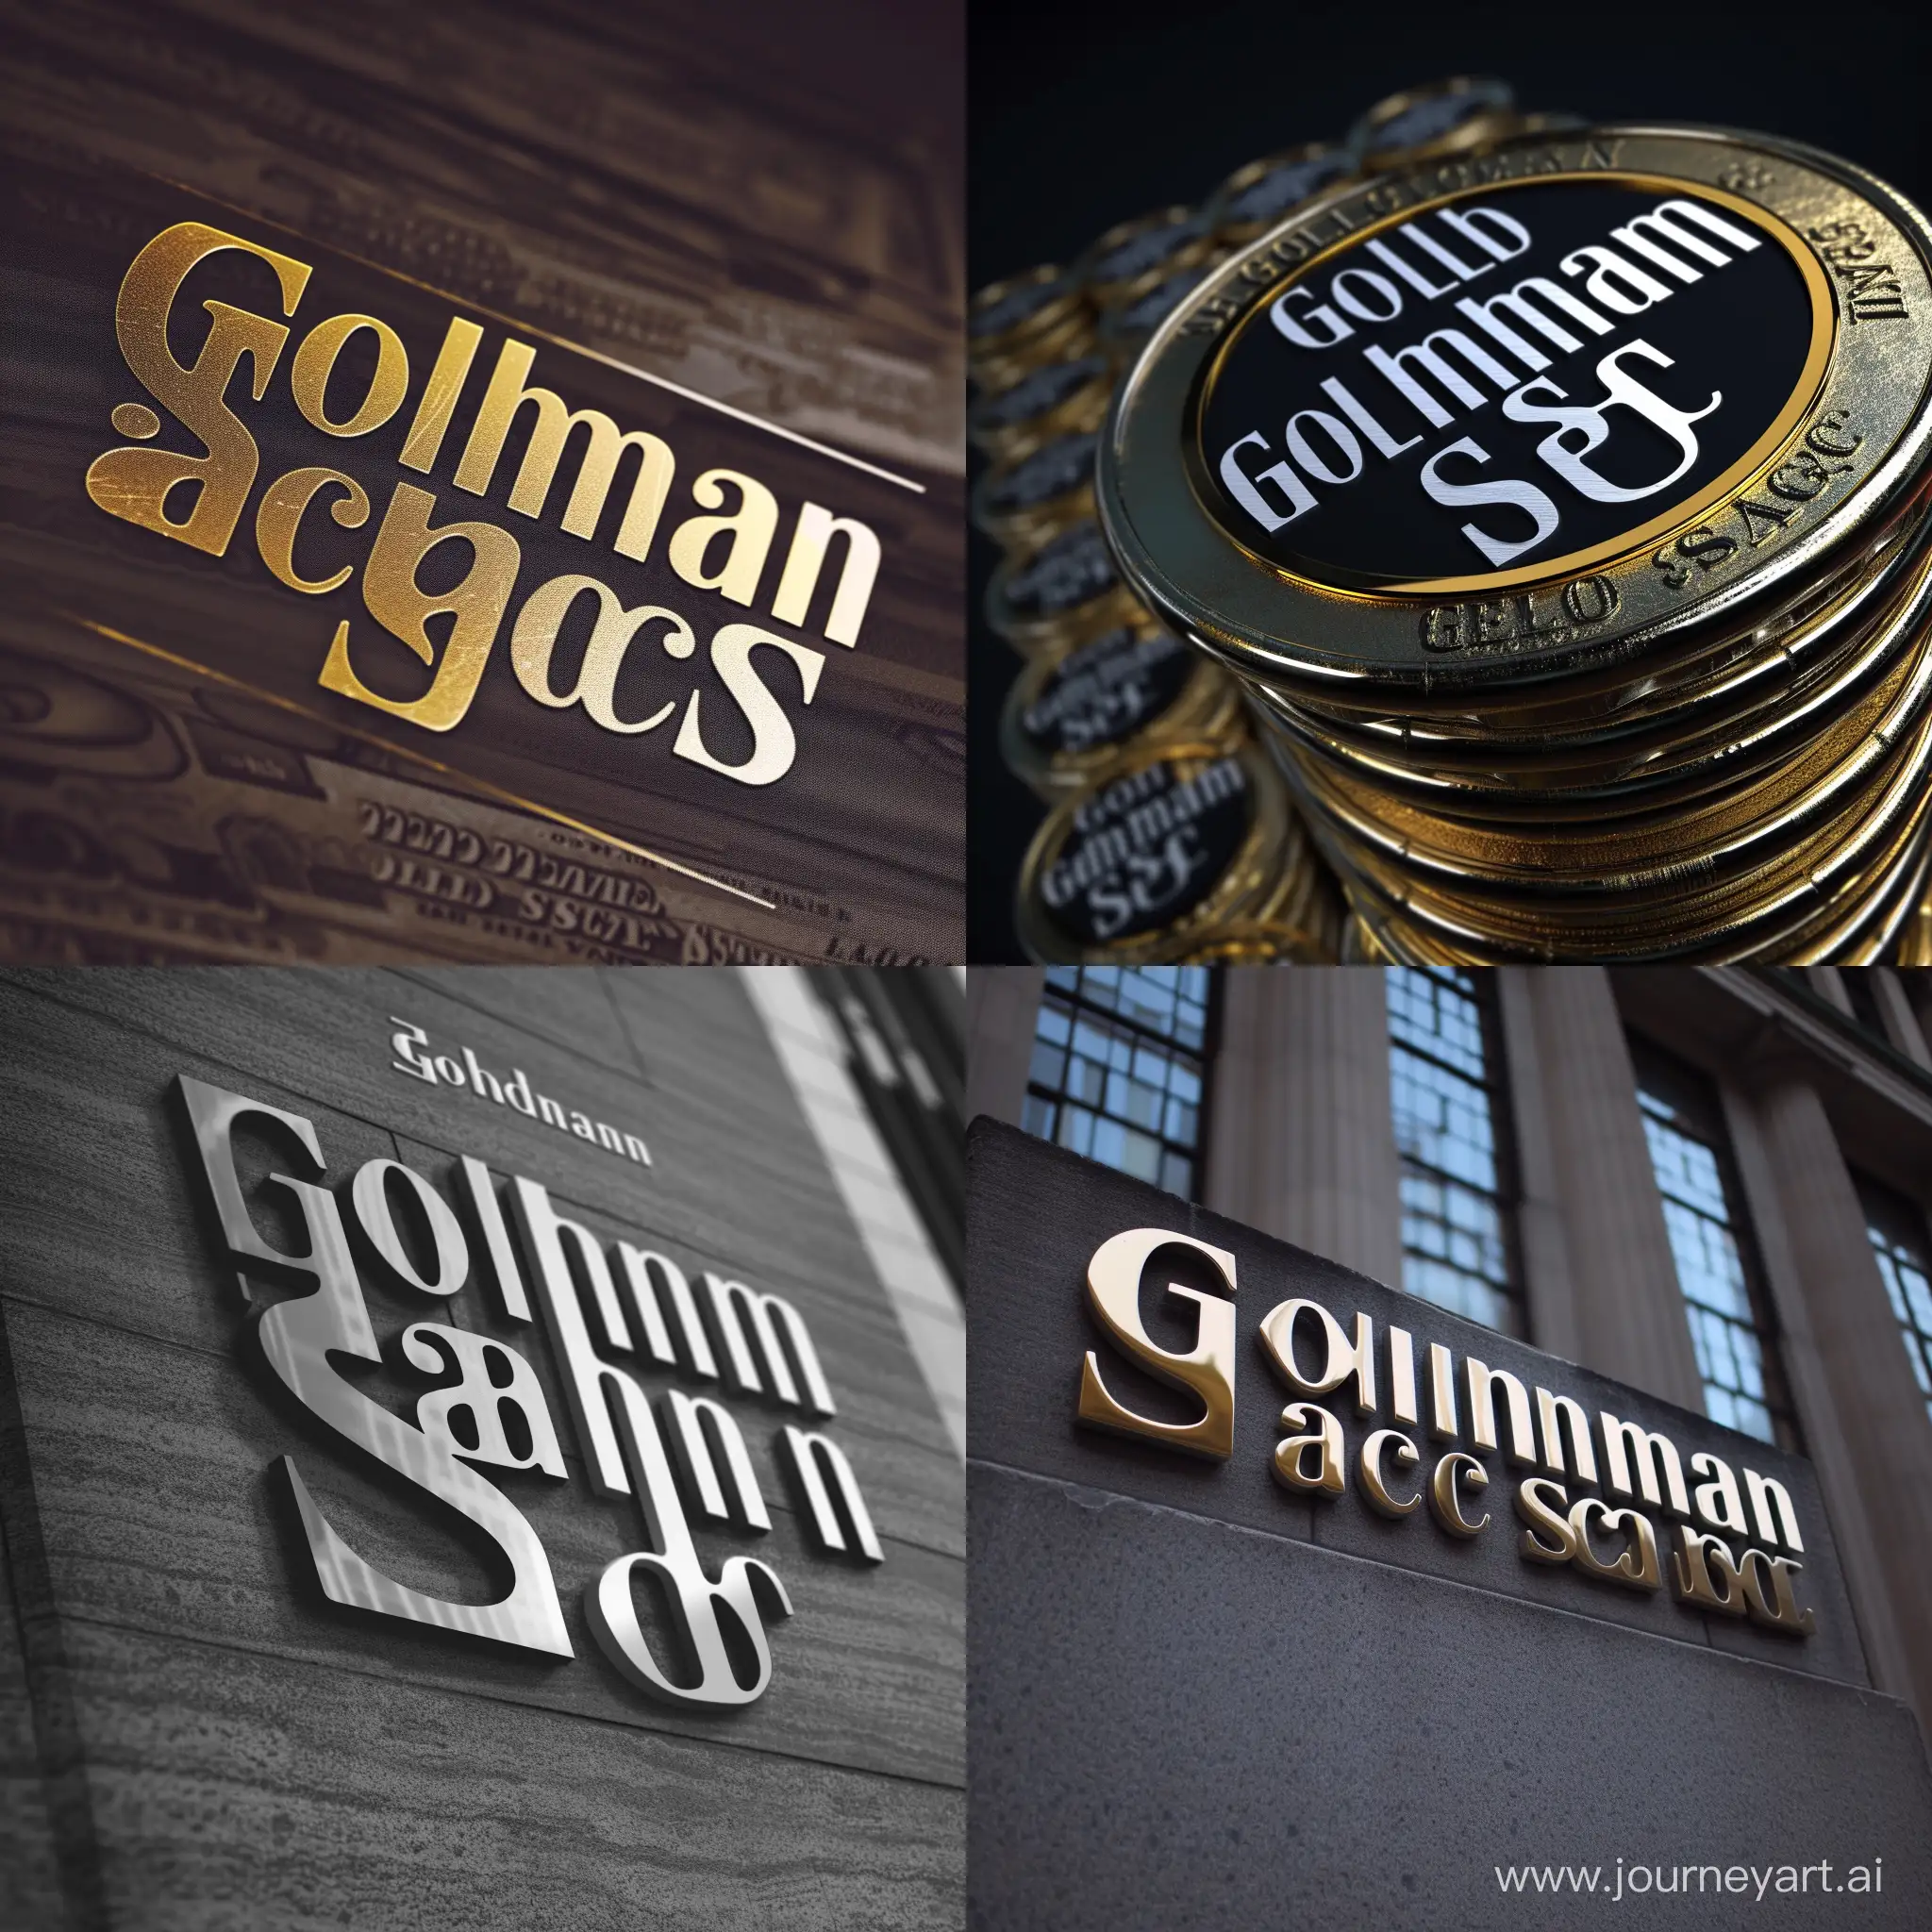 The Goldman Sachs logo but instead of Goldman Sachs it says Goldman Stacks